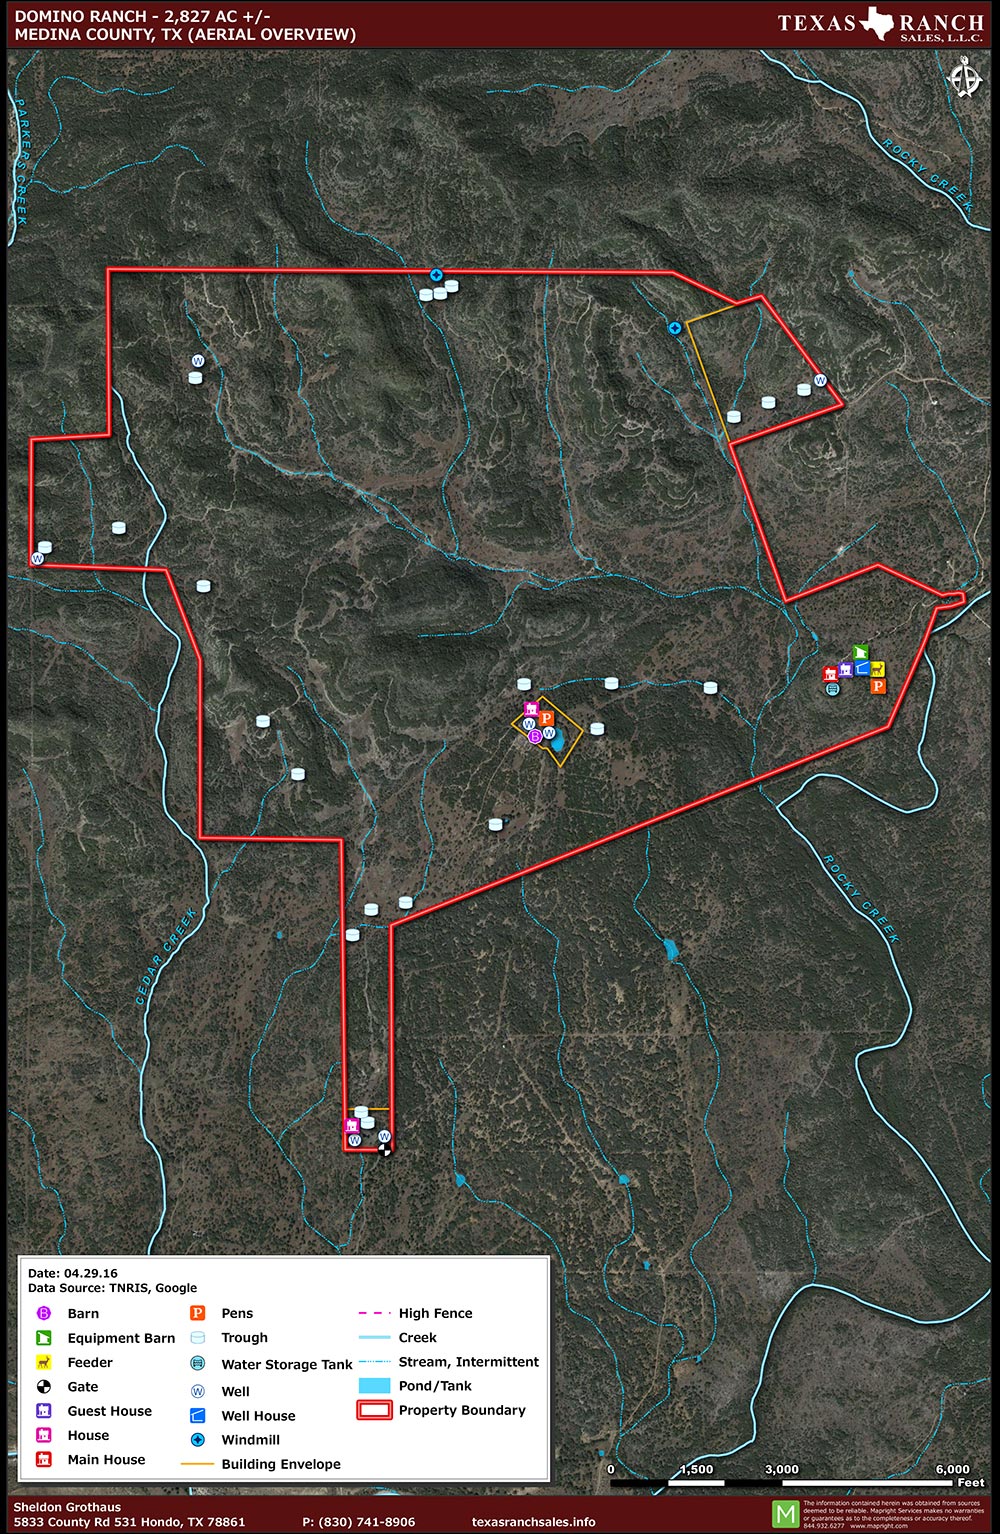 2731 Acre Ranch Medina Aerial Map